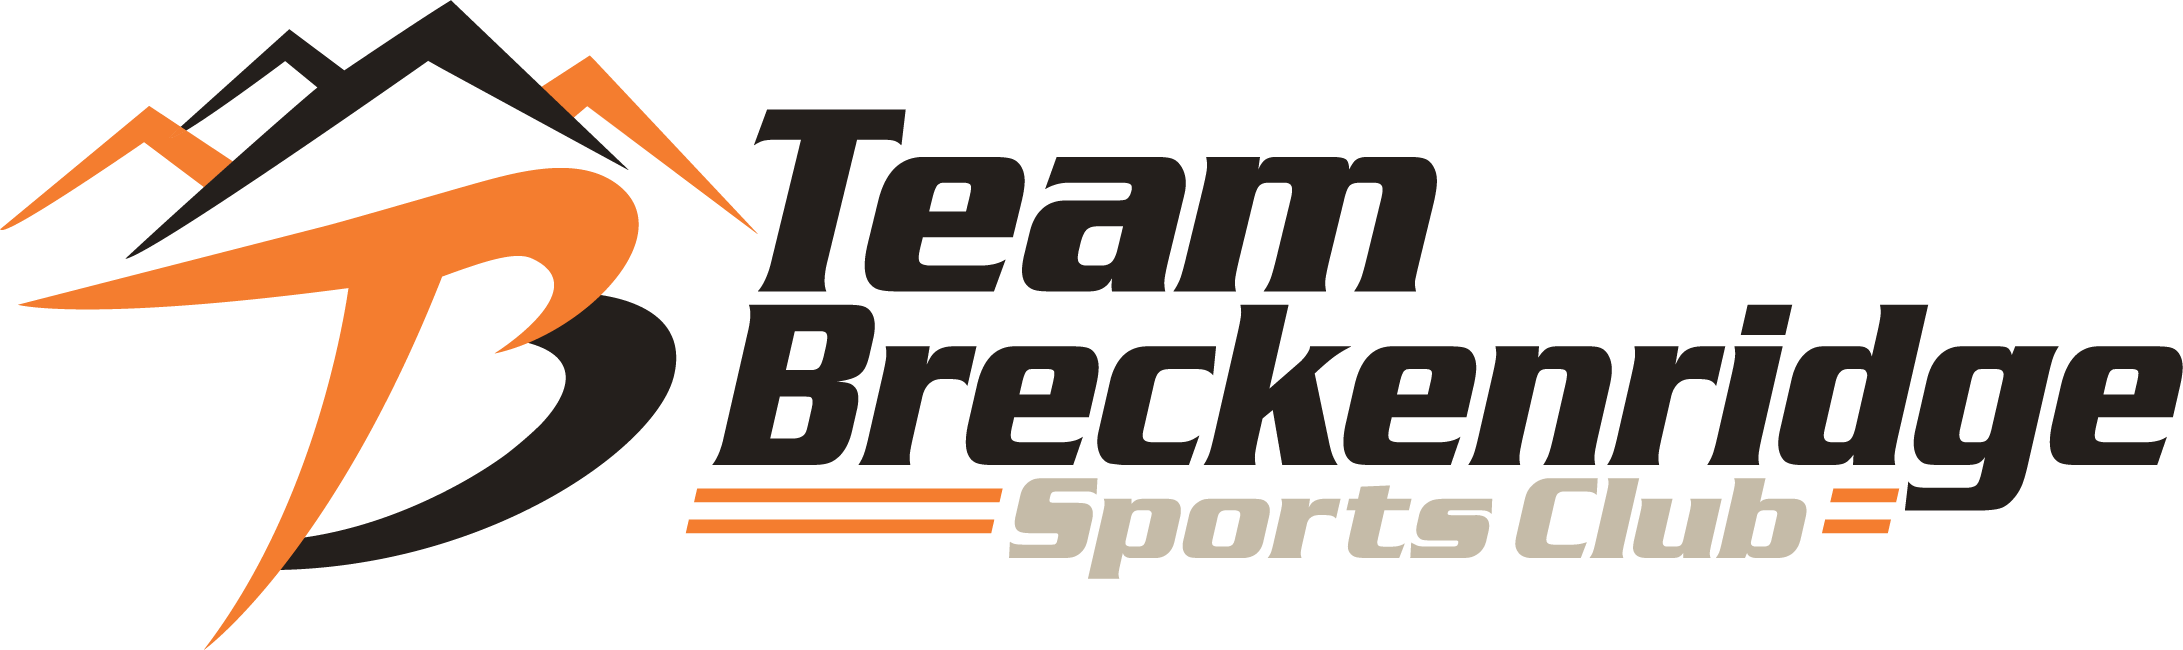 Team Breckenridge Sports Club INC